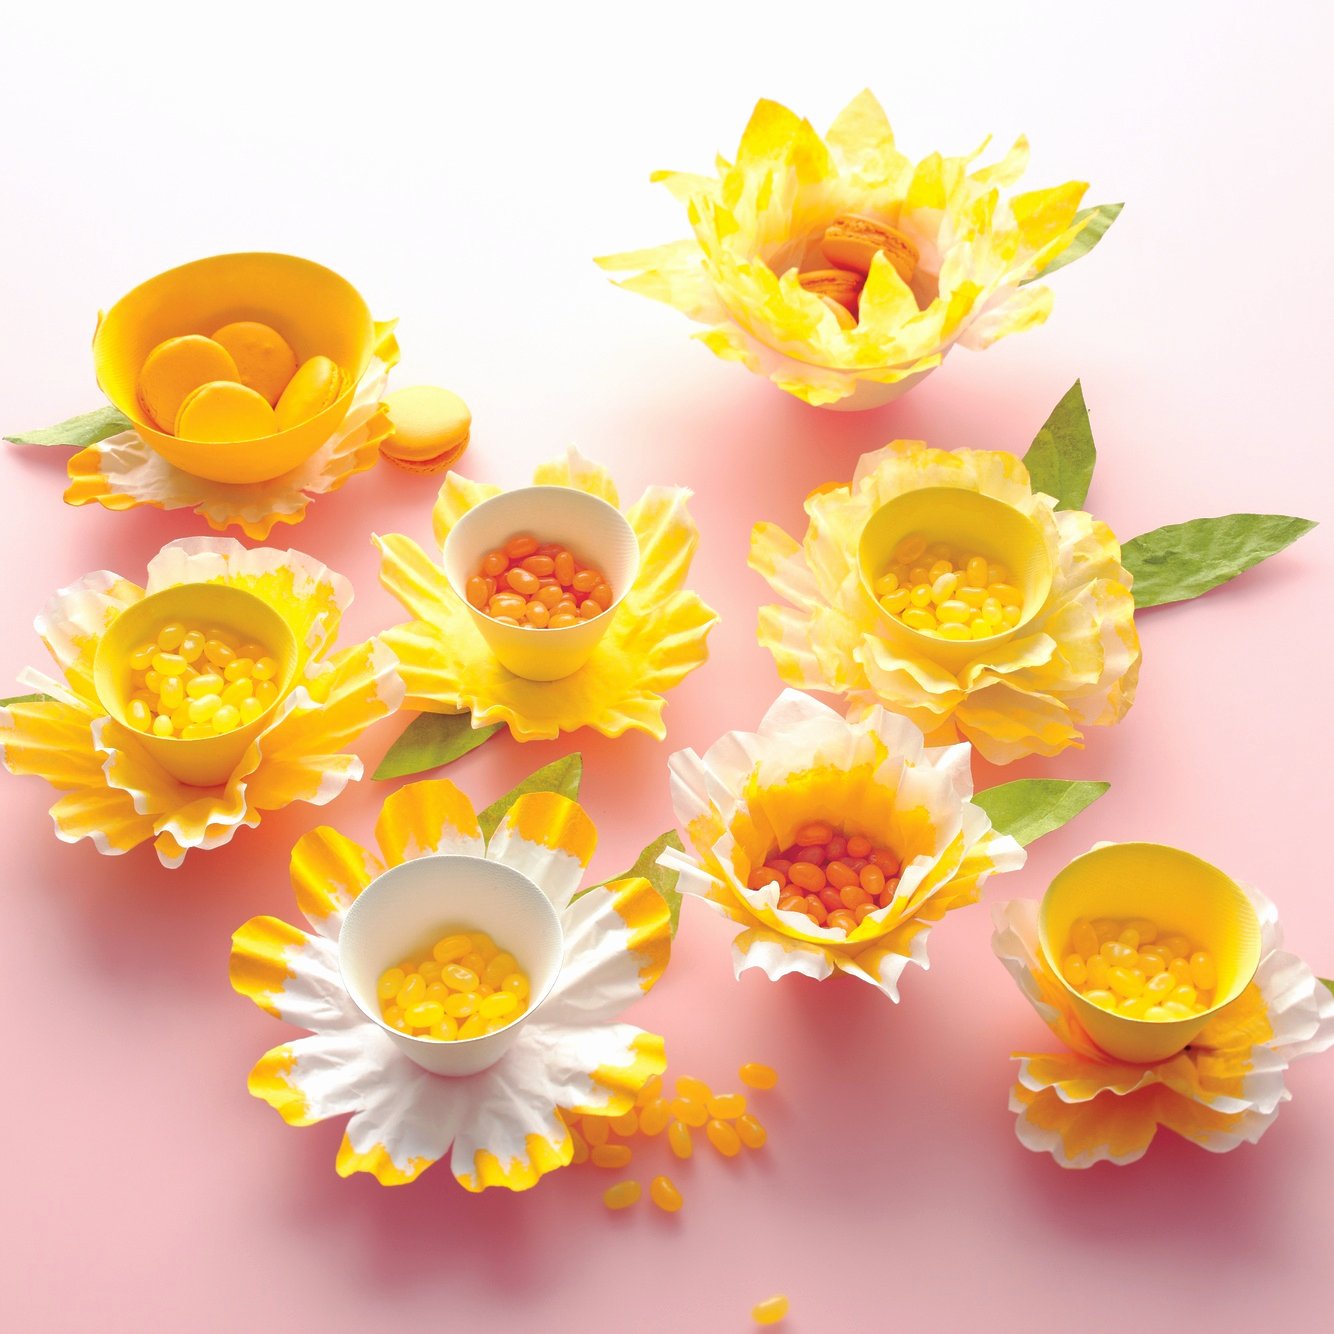 Martha Stewart Coffee Filter Roses Inspirational Spring Flower Bowl